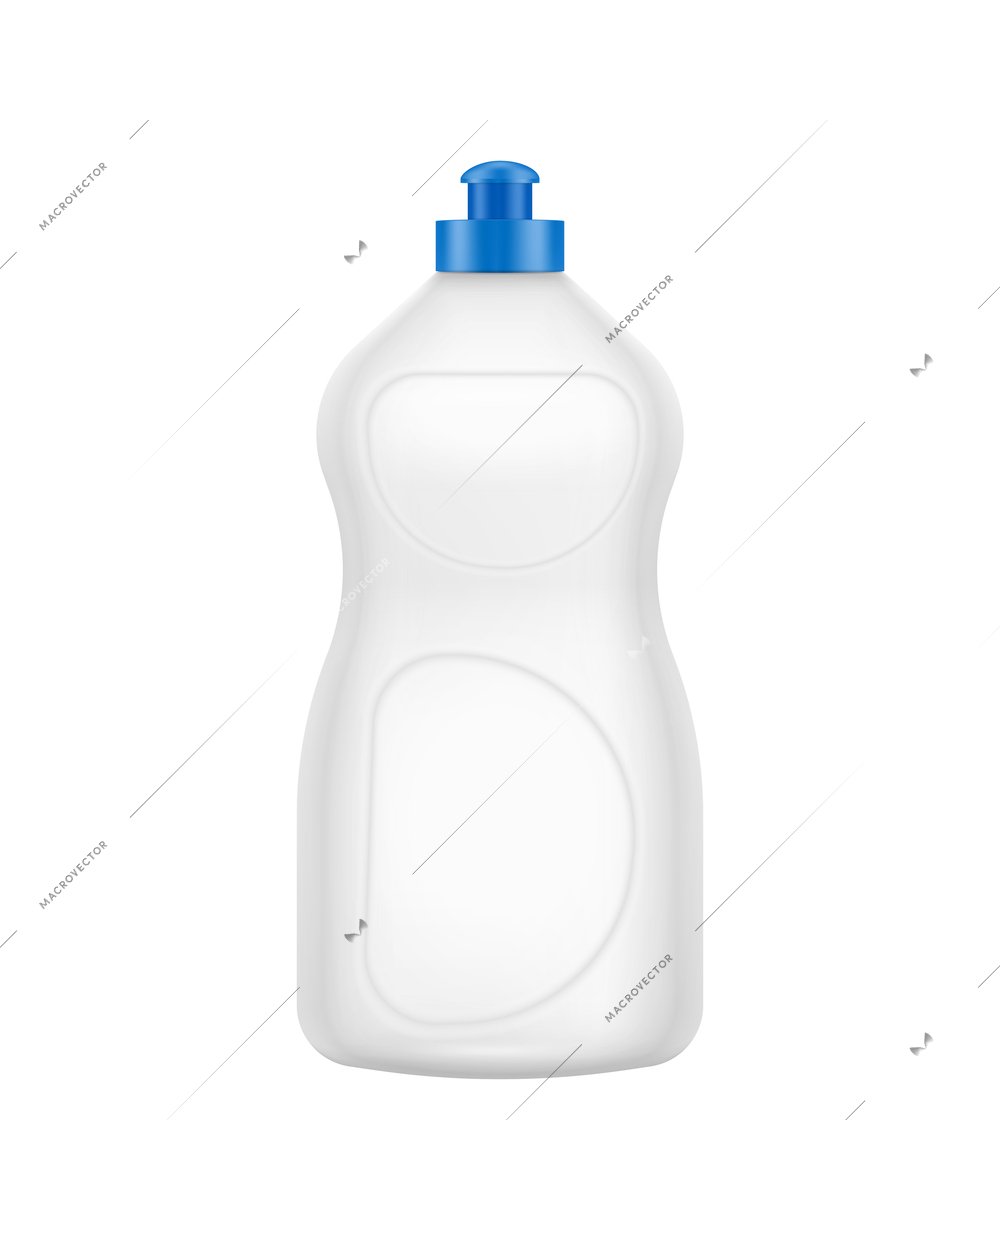 Realistic blank plastic detergent bottle with blue lid vector illustration